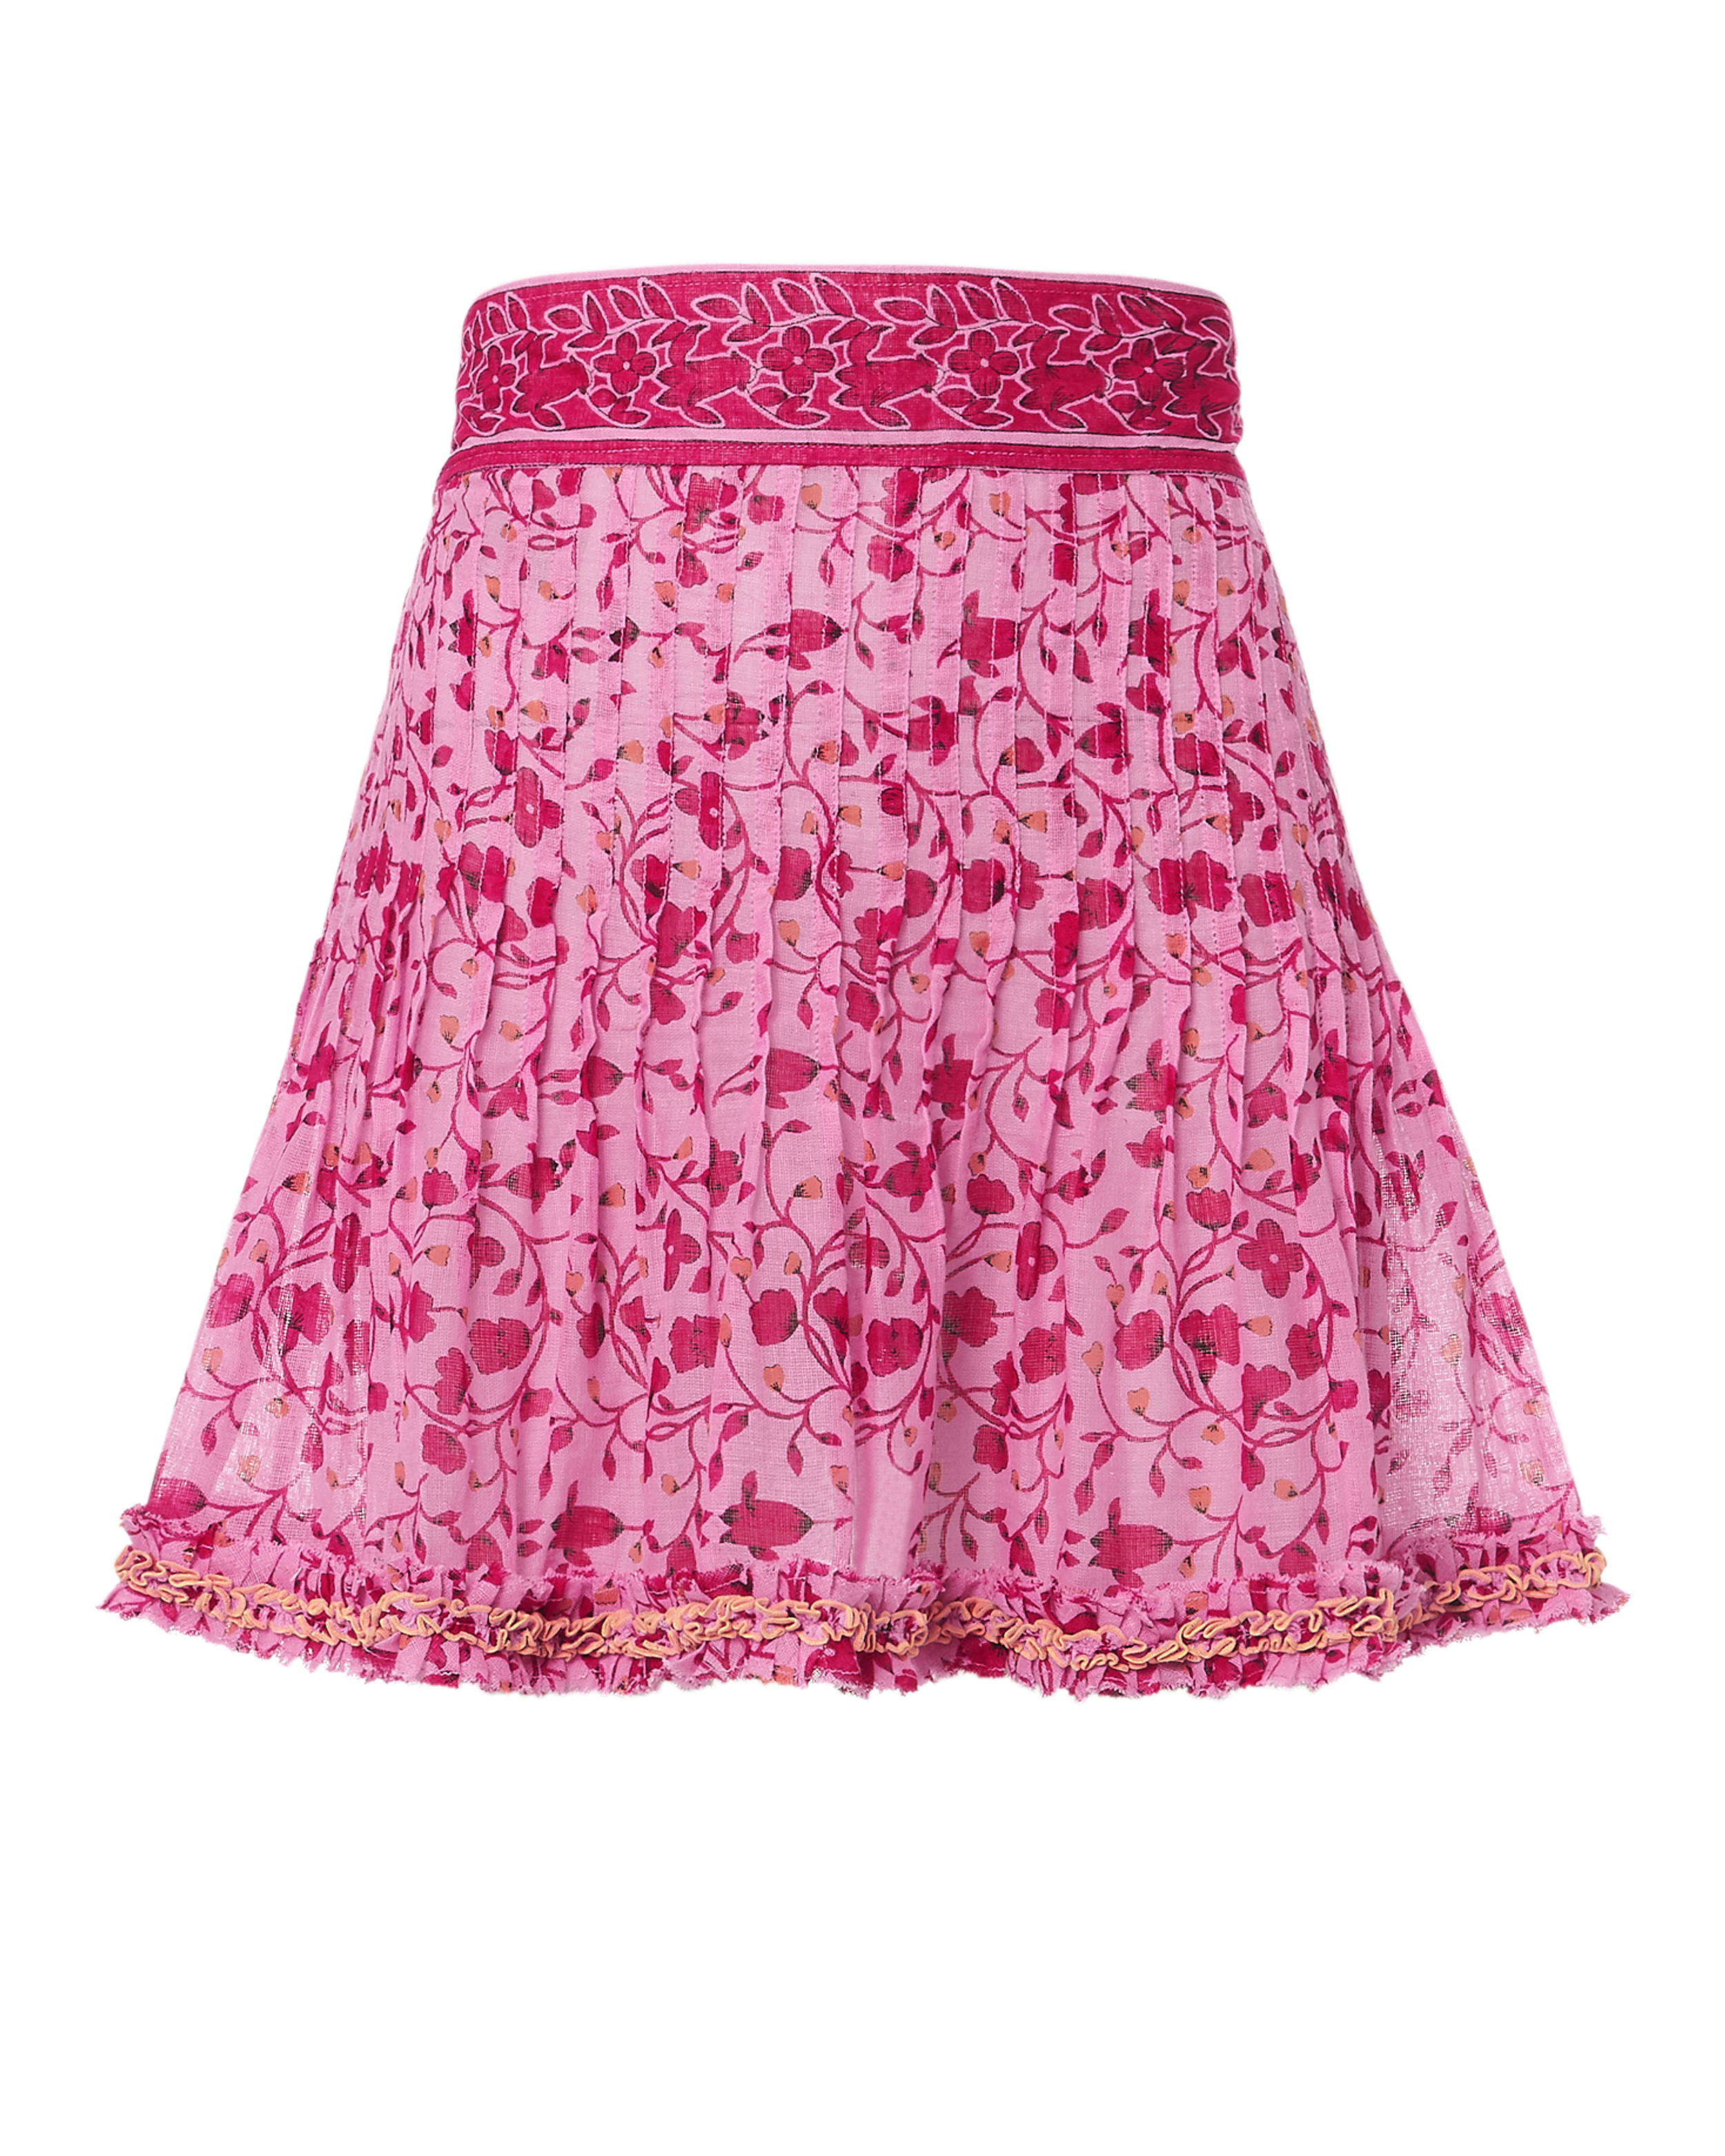 POUPETTE ST BARTH Pippa Mini Skirt,WPIH18MSCSPINK